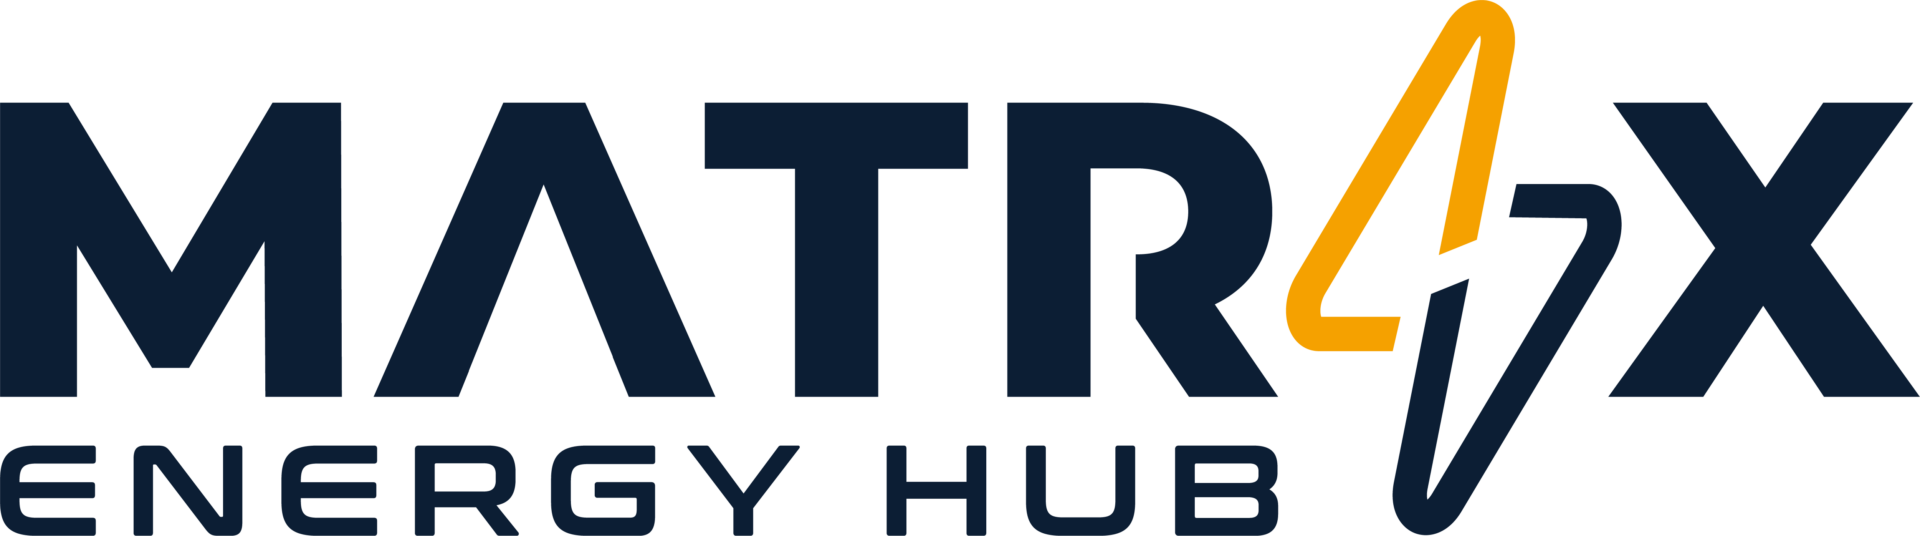 Matrix blue logo